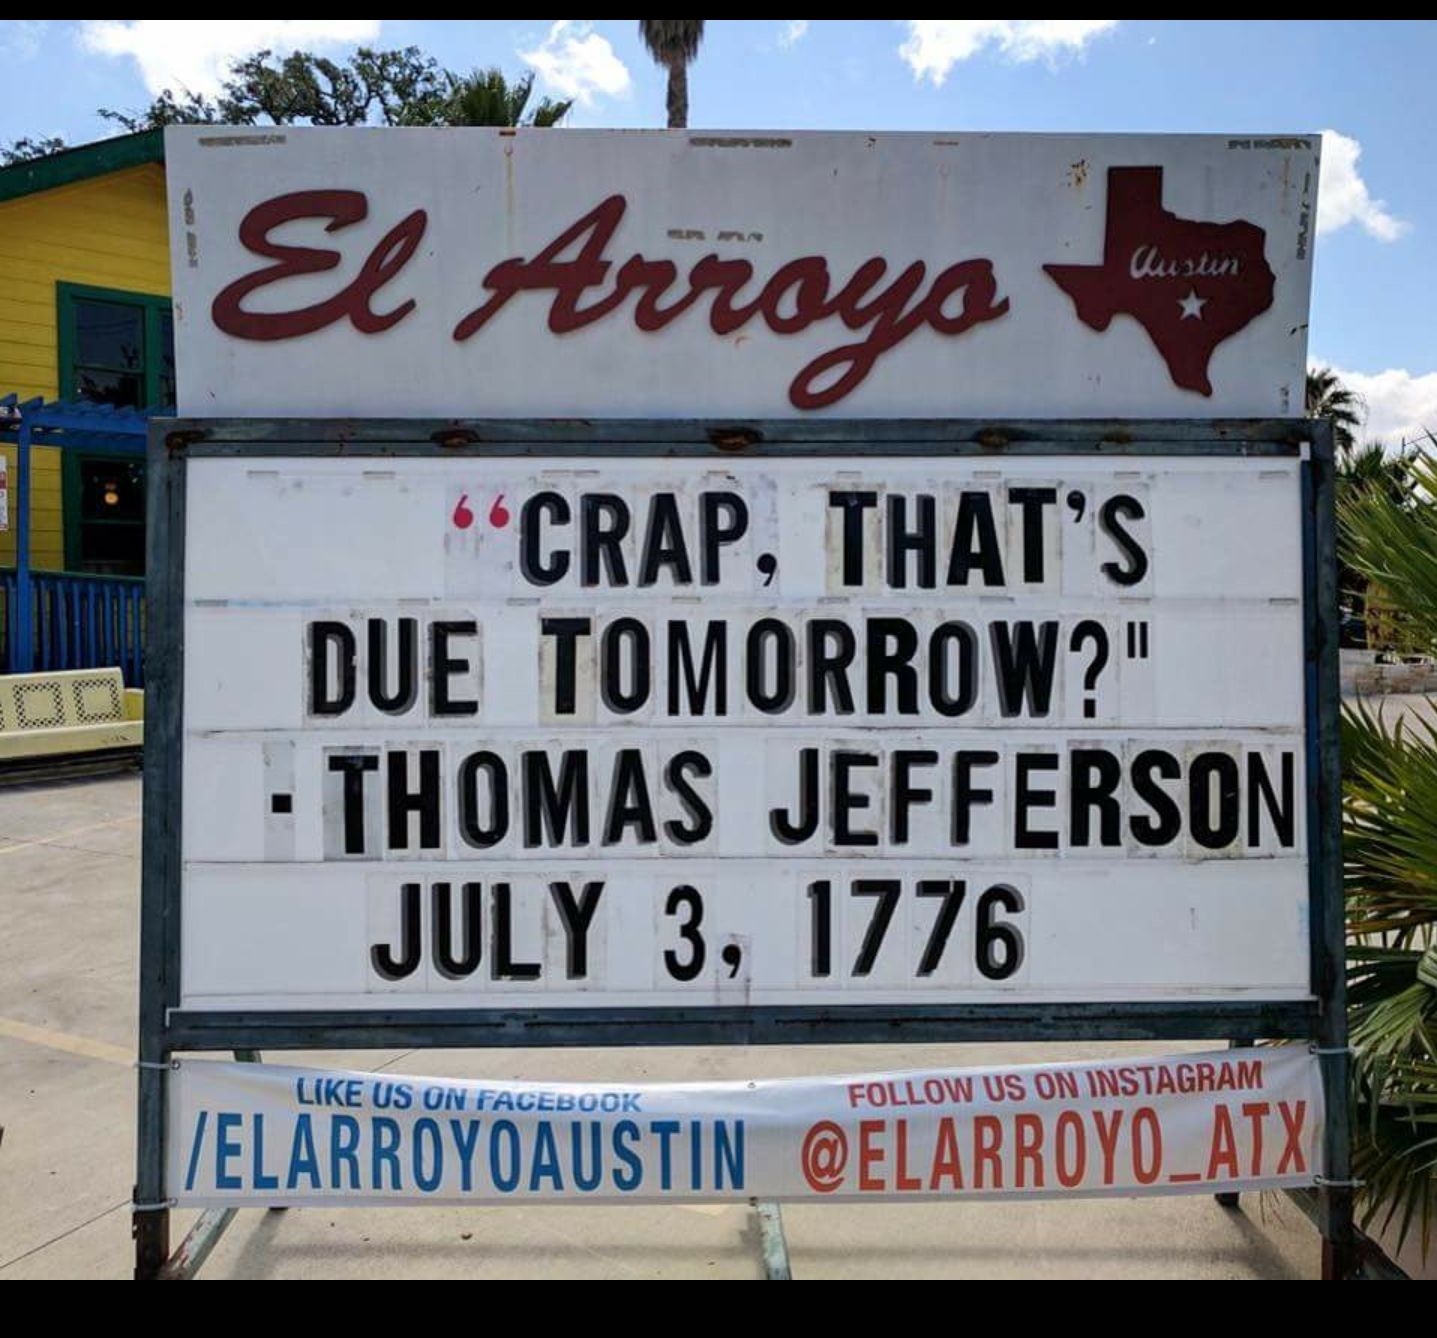 funniest restaurant signs - Austen El Arroyo "Crap, That'S Due Tomorrow?" Thomas Jefferson Us On Facebook Us On Instagram IElarroyoaustin